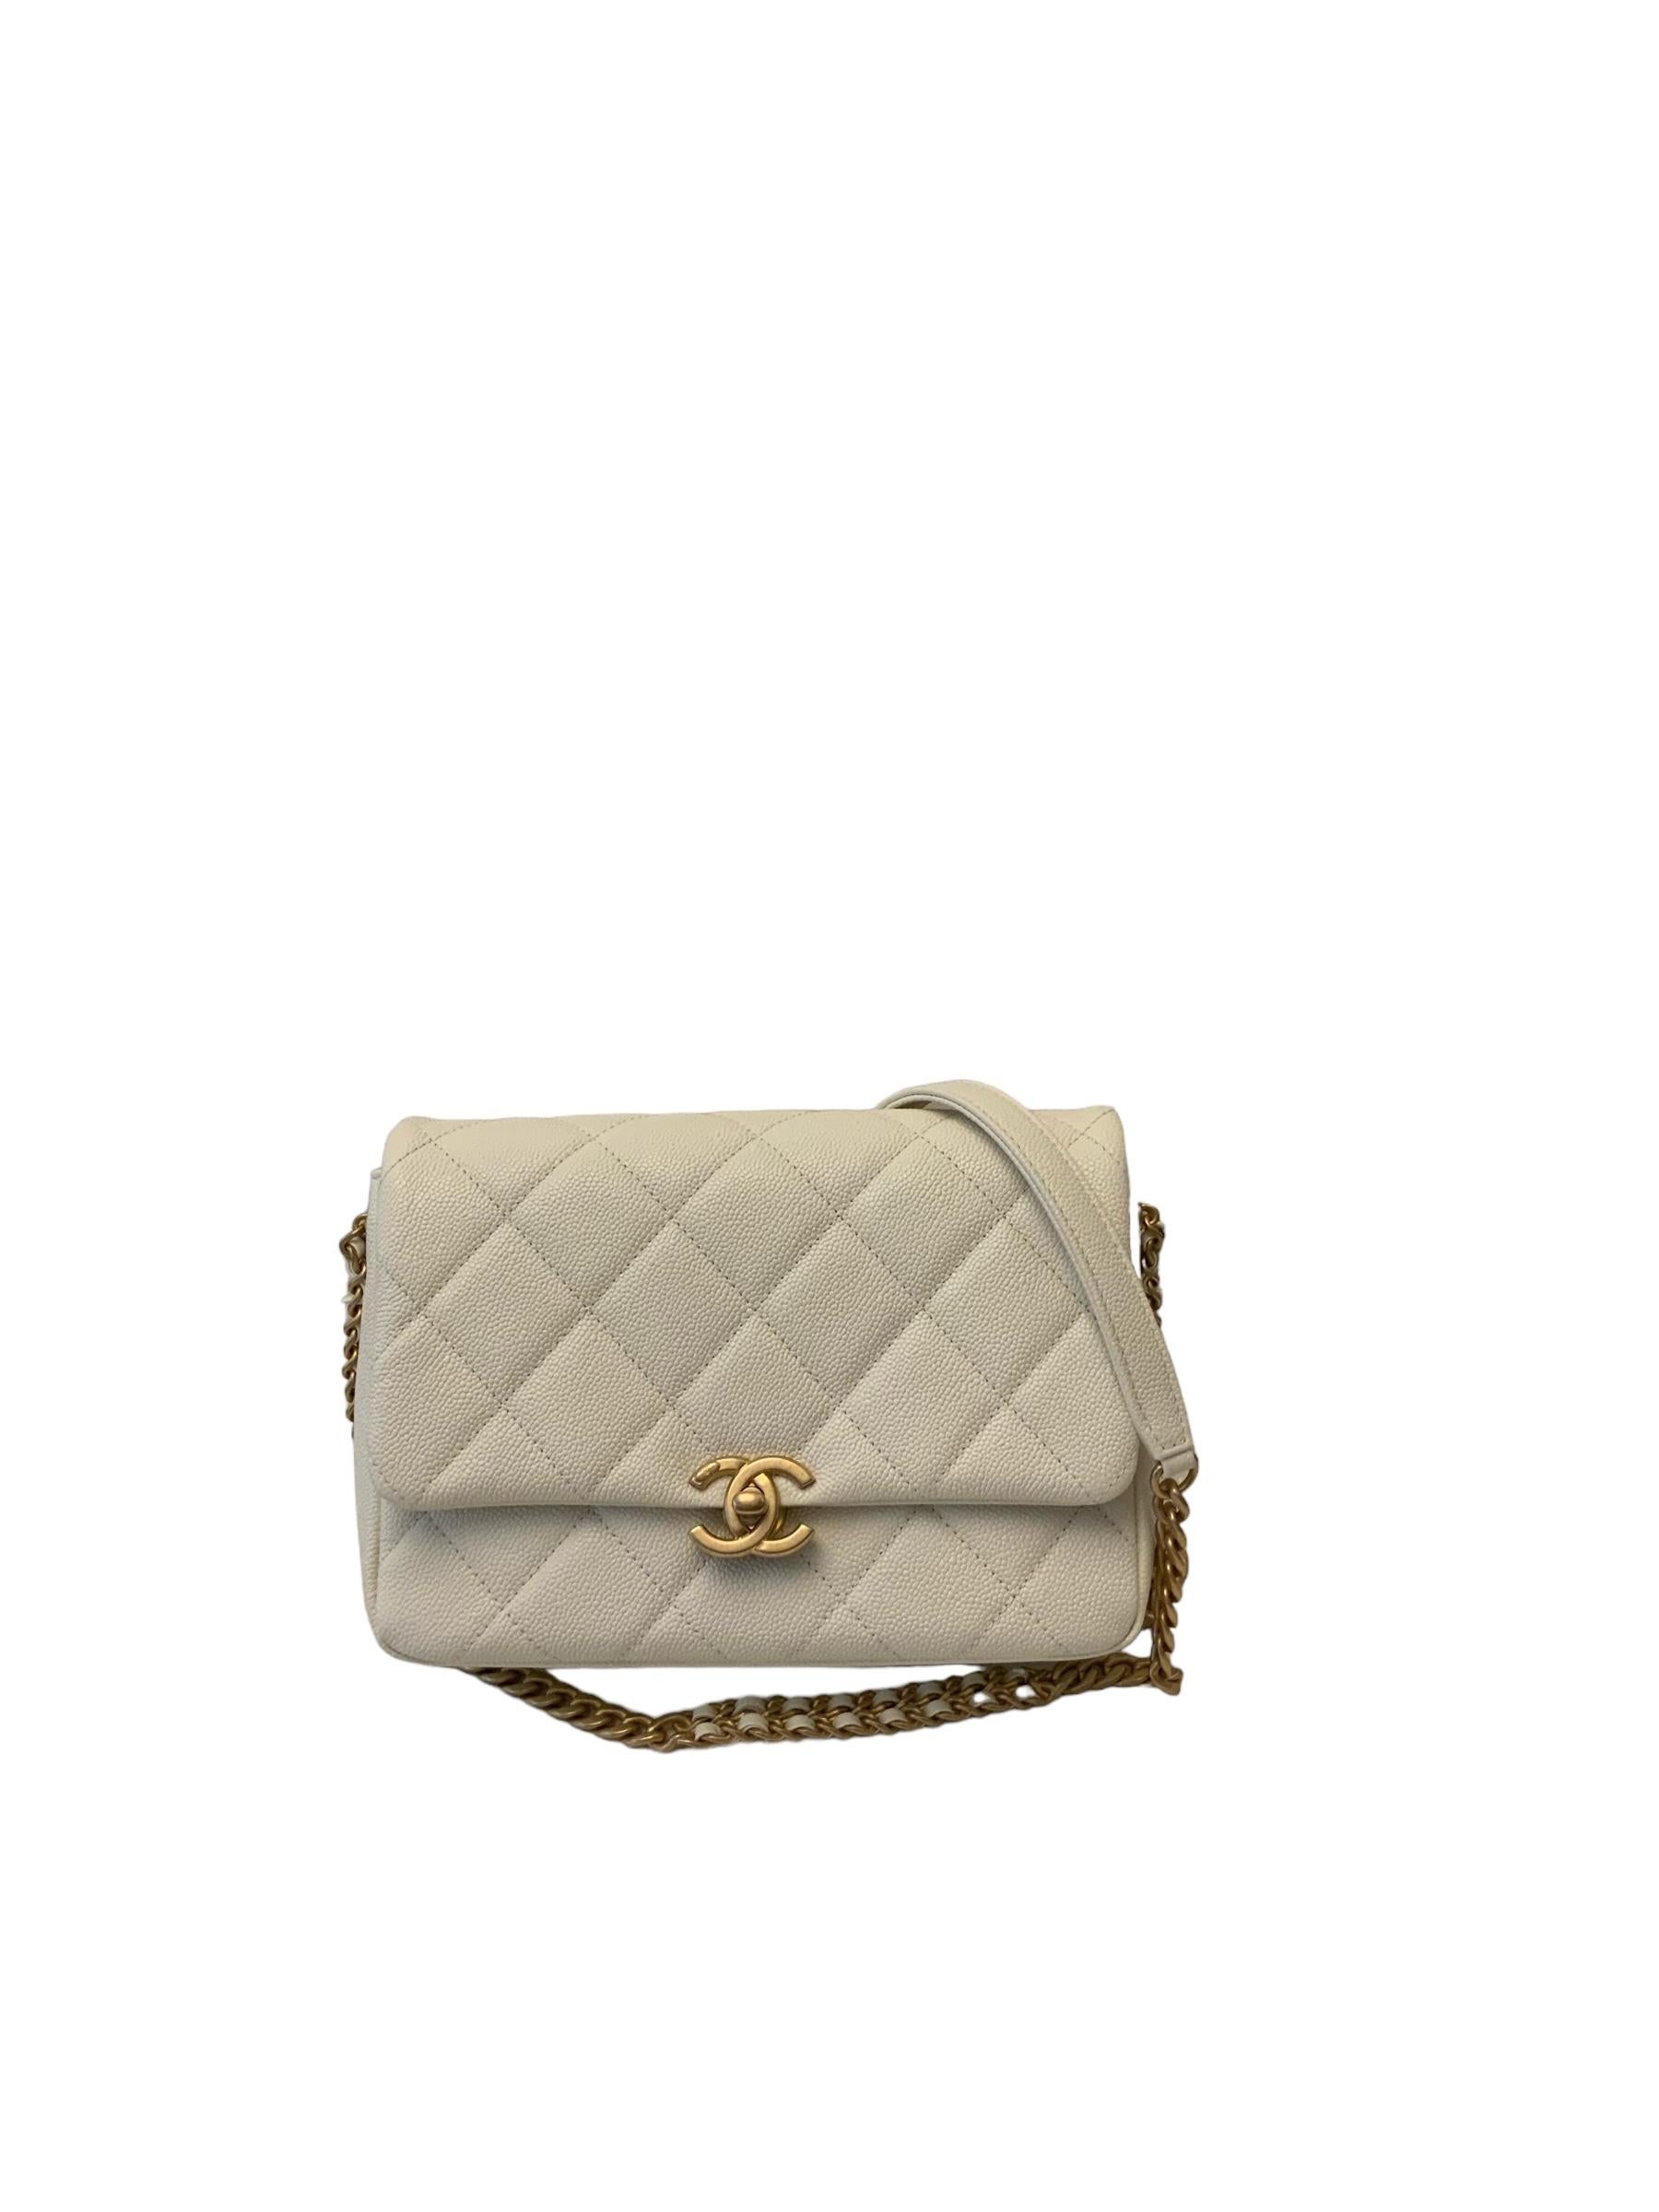 Chanel 22P Melody Flap White Caviar Small Bag  6